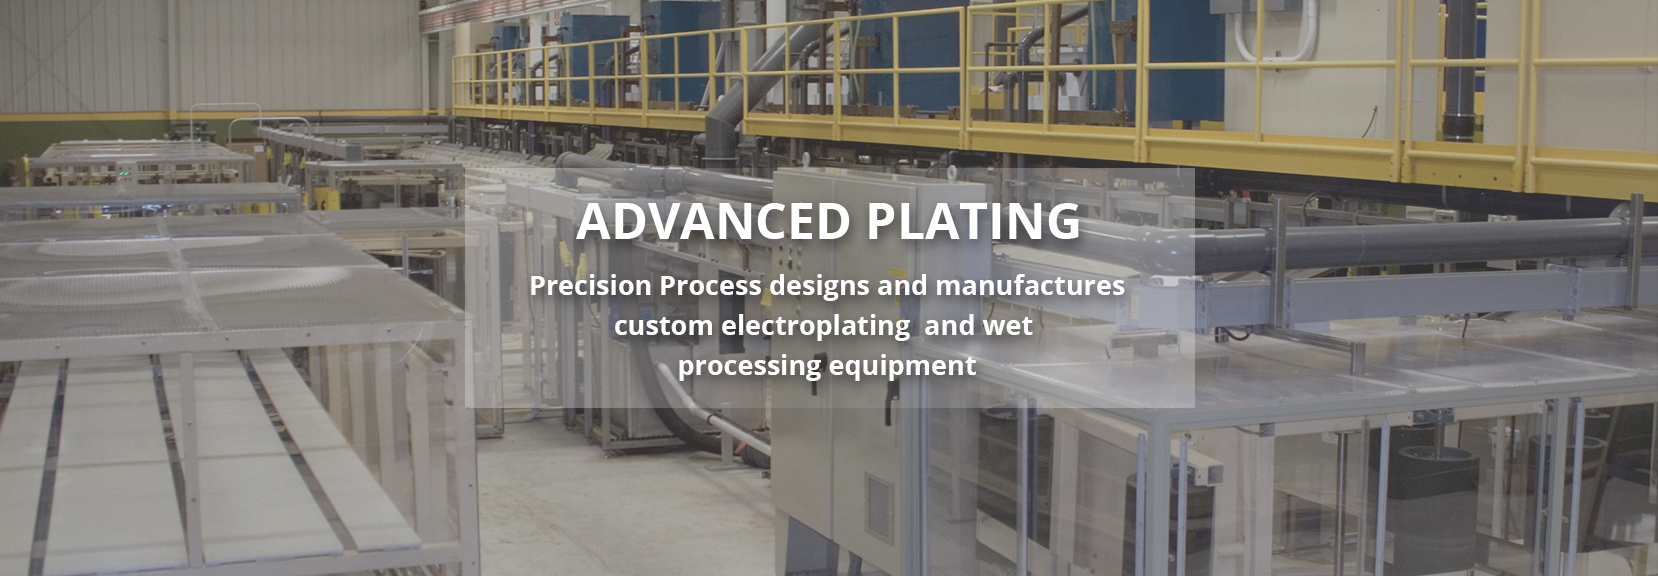 Precision Process Equipment